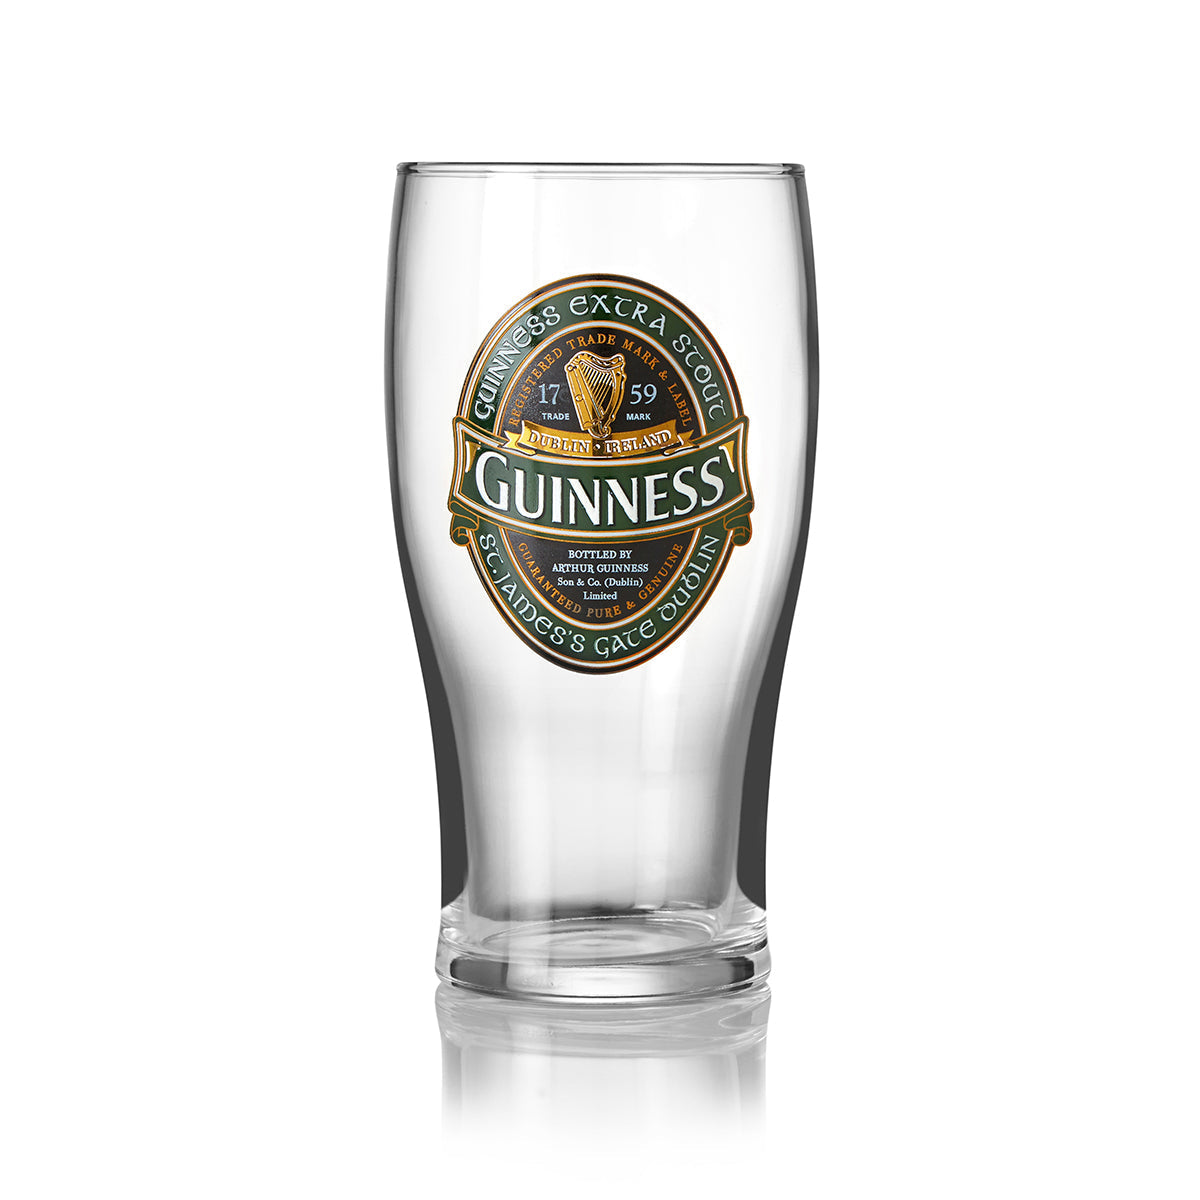 Guinness UK Guinness Ireland Collection Pint Glass - 24 Pack.